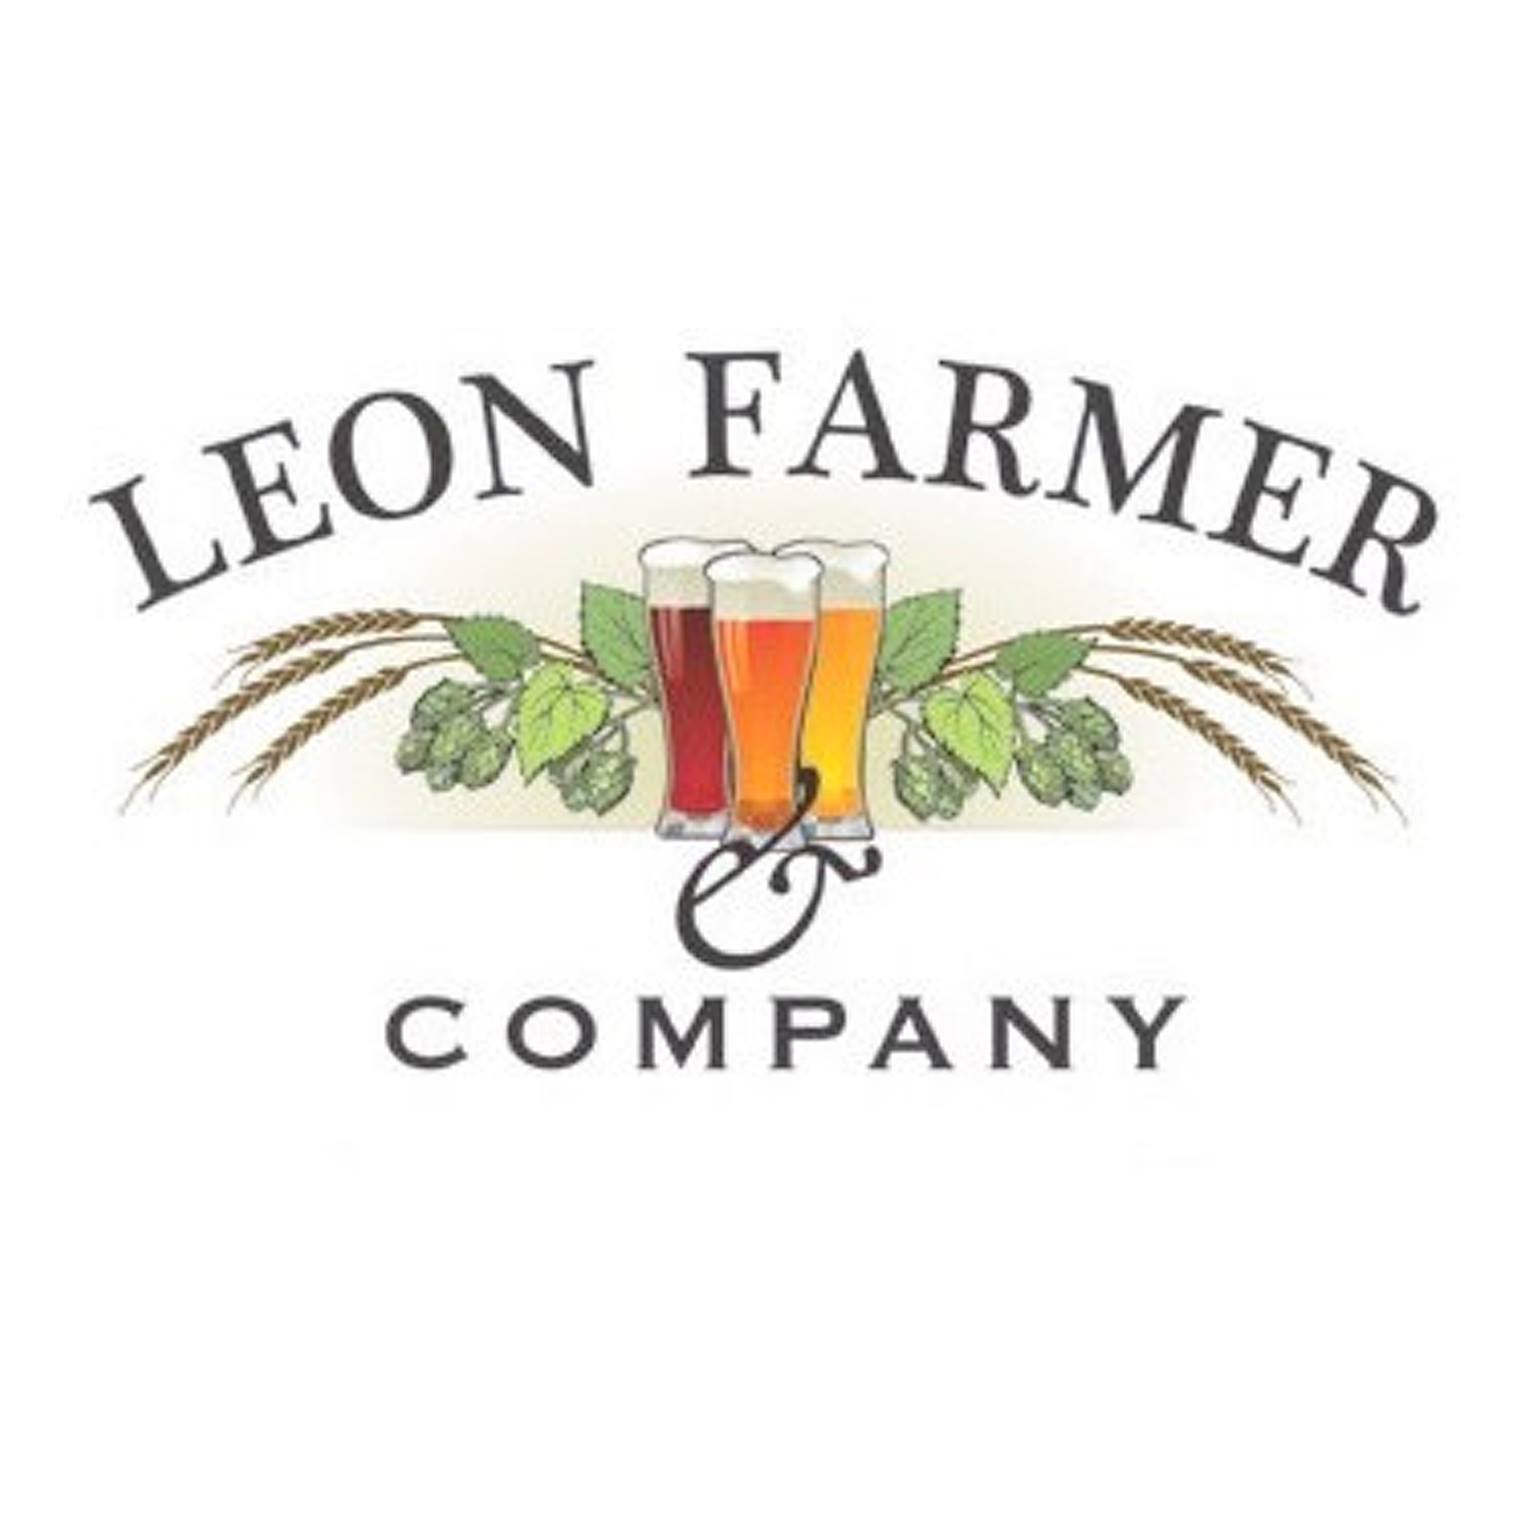 Leon Farmer & Company